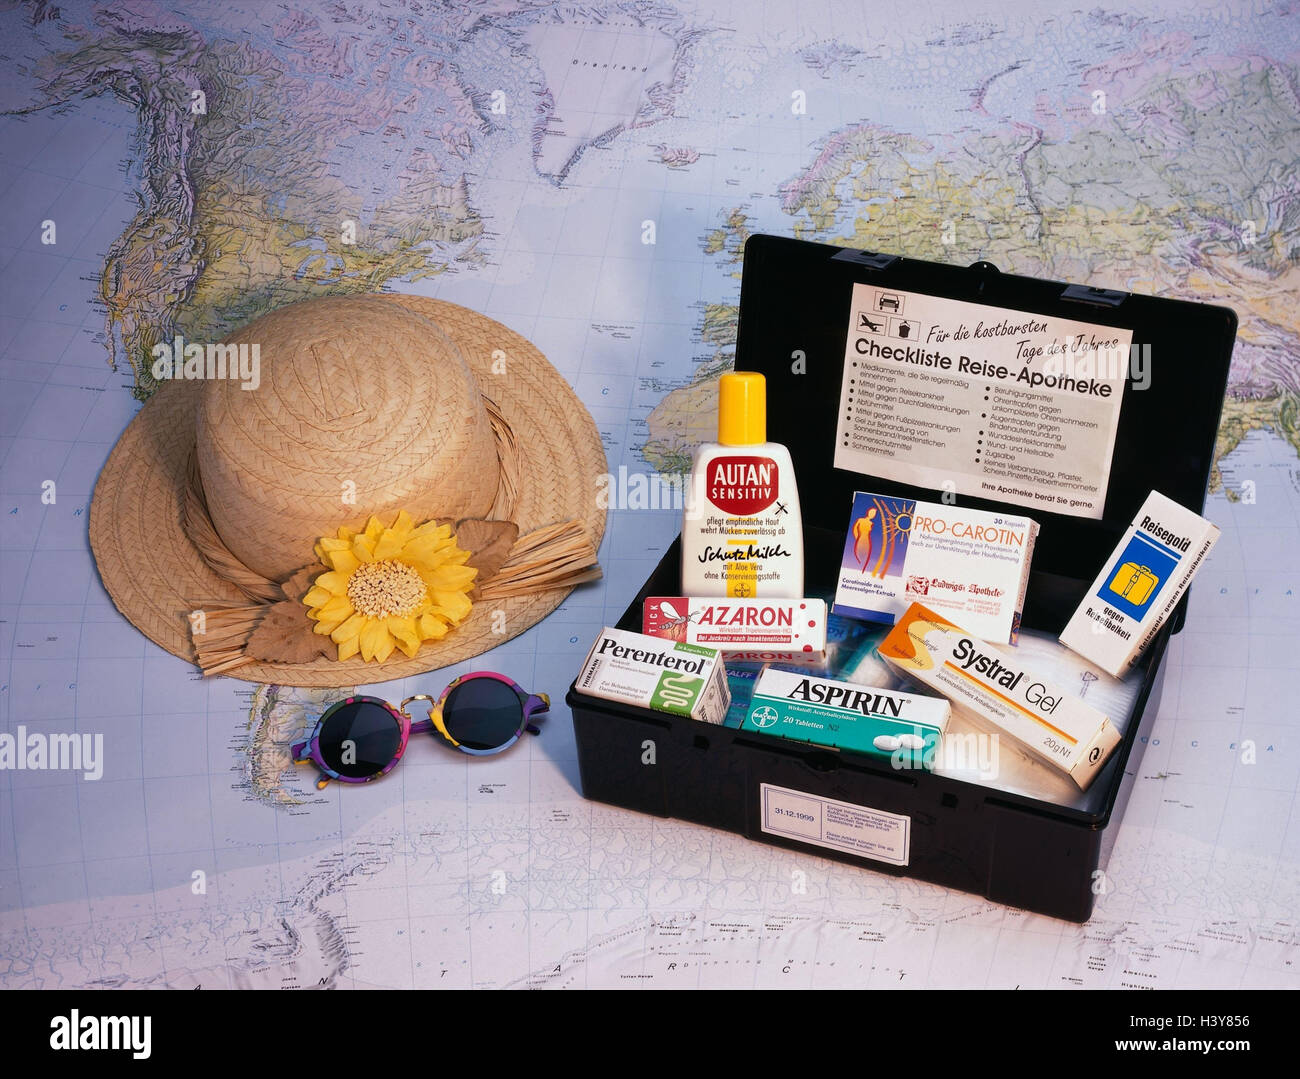 Urlaub, Reiseapotheke, Karte, Strohhut, Sonnenbrille Produktfotografie, Urlaubsreise, Planung, Drogen, Medikamente Stockfoto